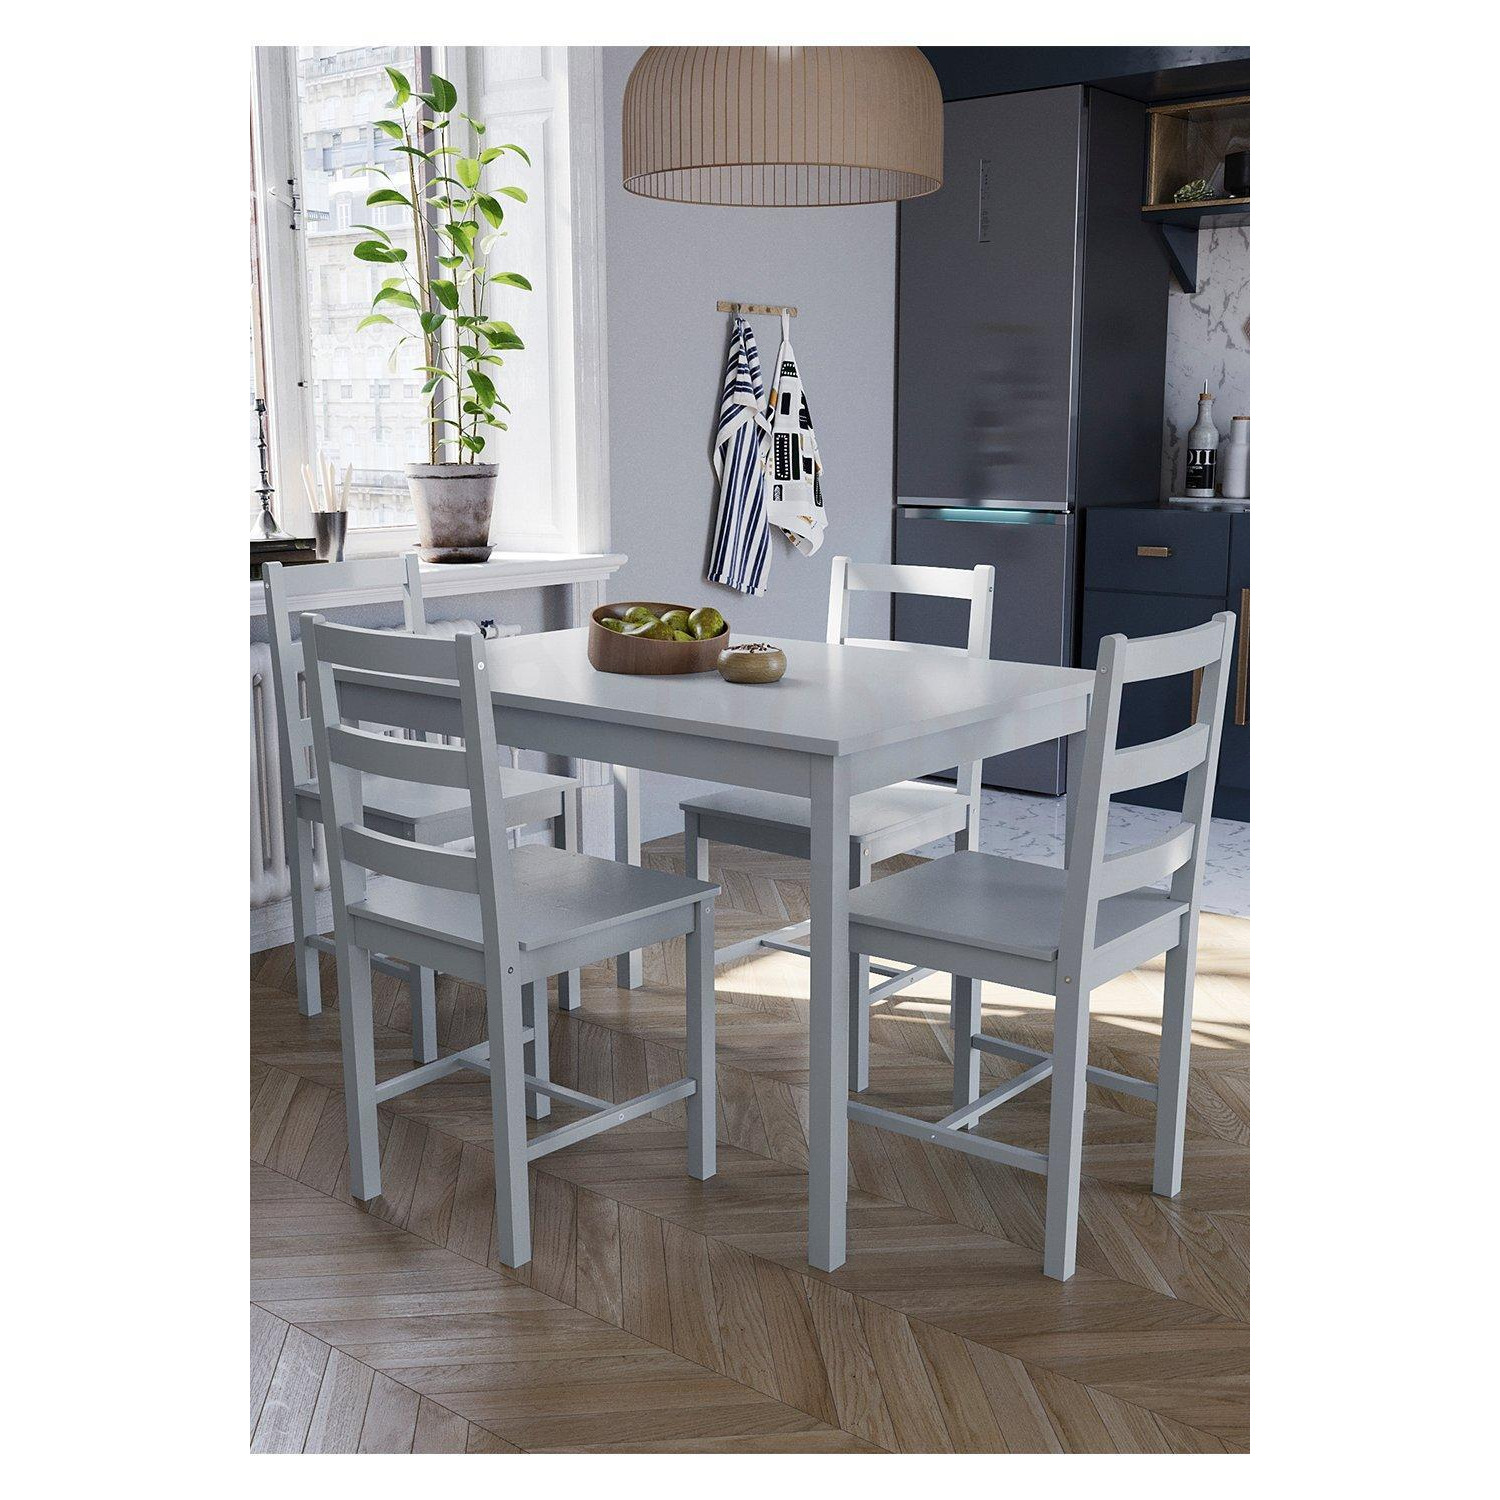 Vida Designs Yorkshire 4 Seater Dining Set Kitchen Furniture - image 1